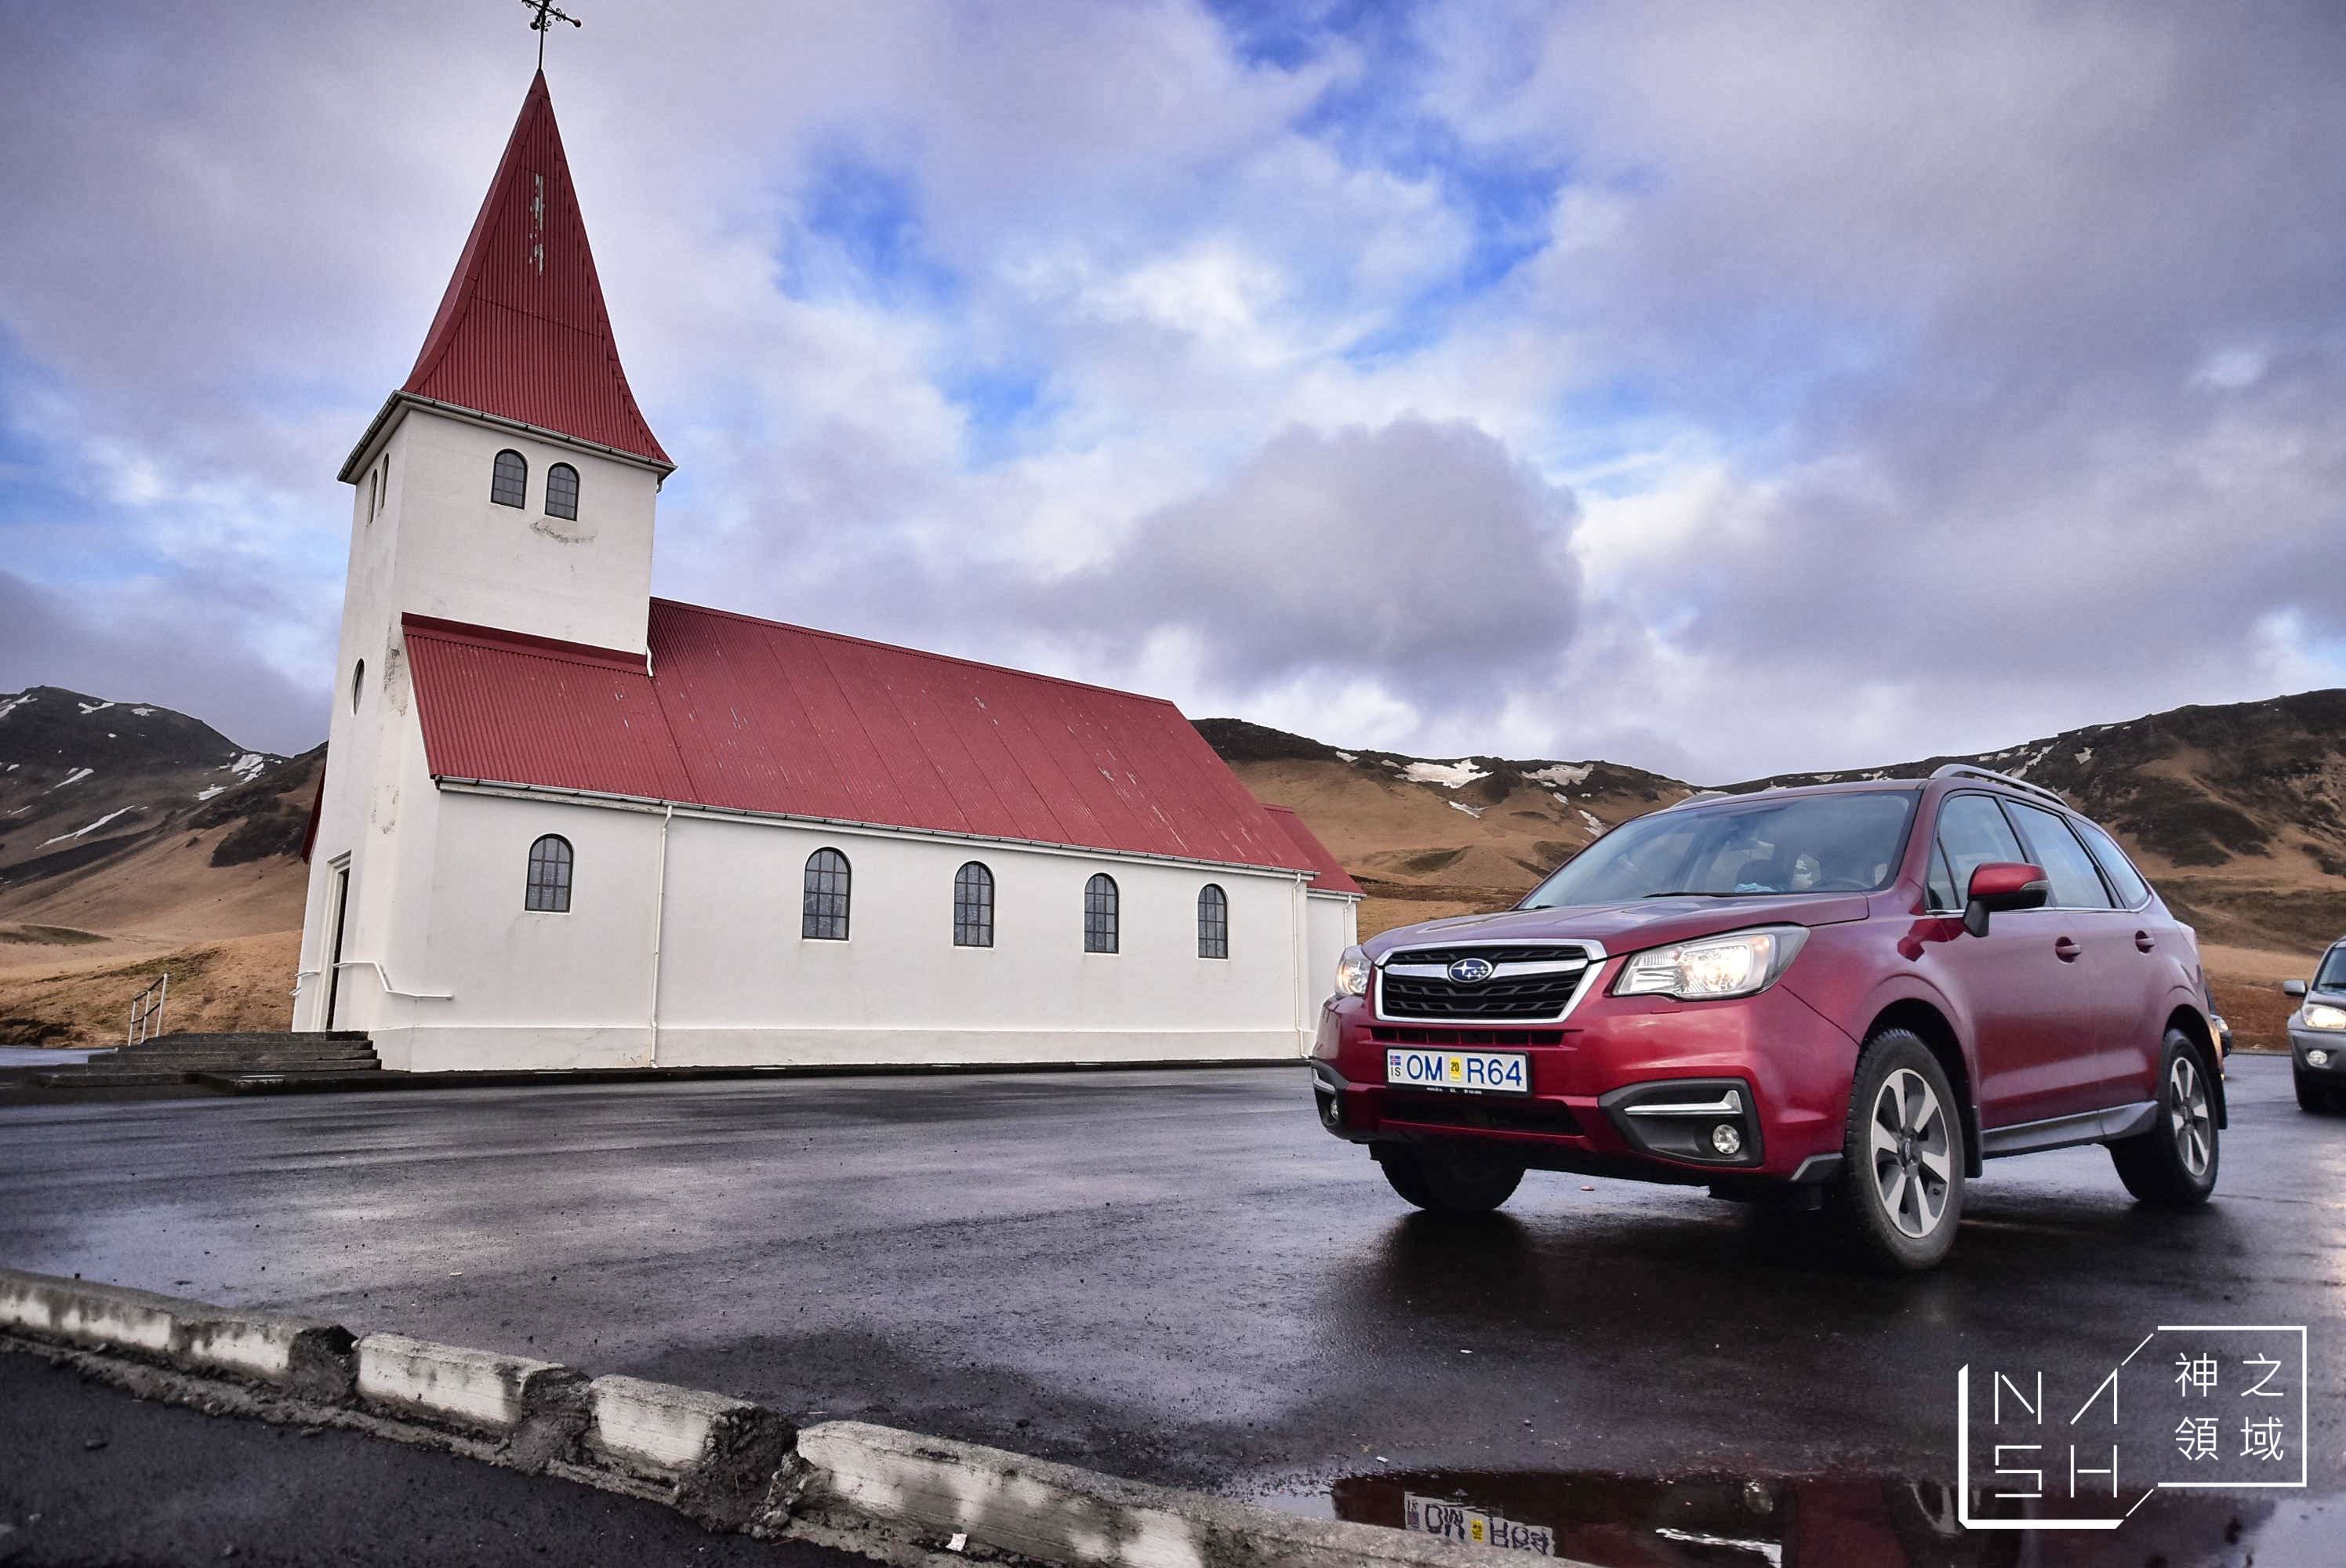 Vik i Myrdal Church,冰島自由行環島景點推薦,冰島自助景點推薦,維克教堂,vik church